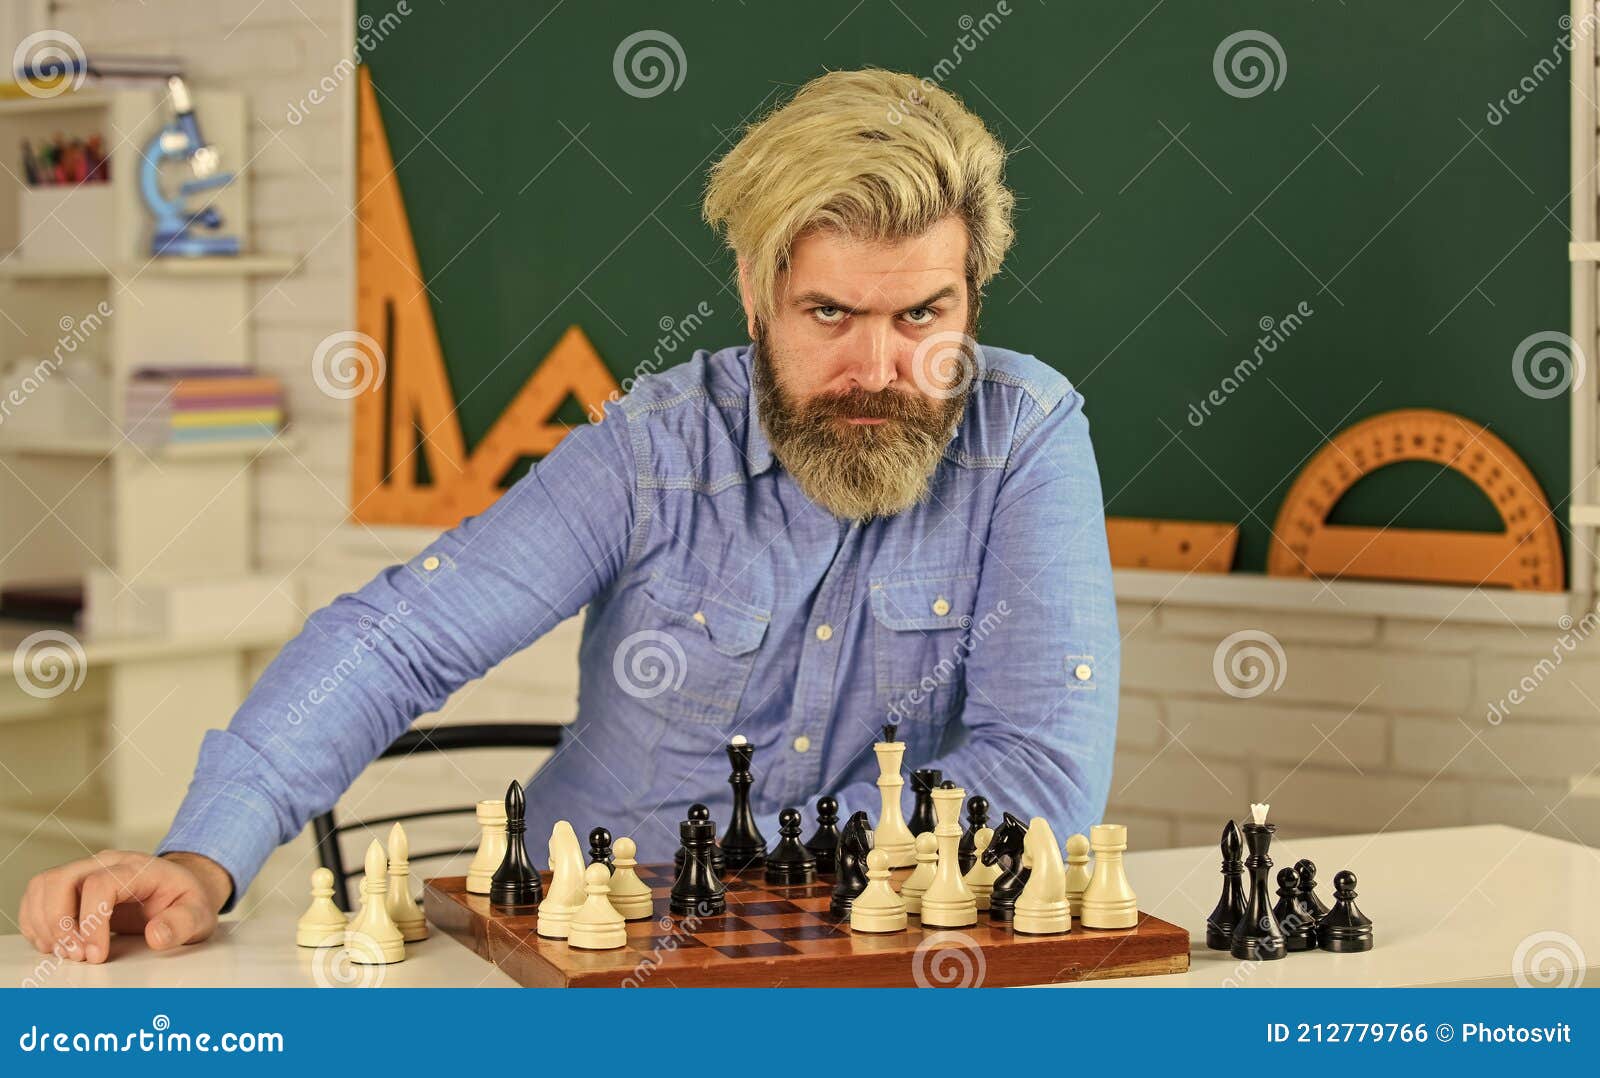 Tática é saber o que fazer lição de xadrez conceito de estratégia jogar  xadrez passatempo intelectual figuras no tabuleiro de xadrez de madeira  pensar no próximo passo lógicas de desenvolvimento aprender a jogar xadrez